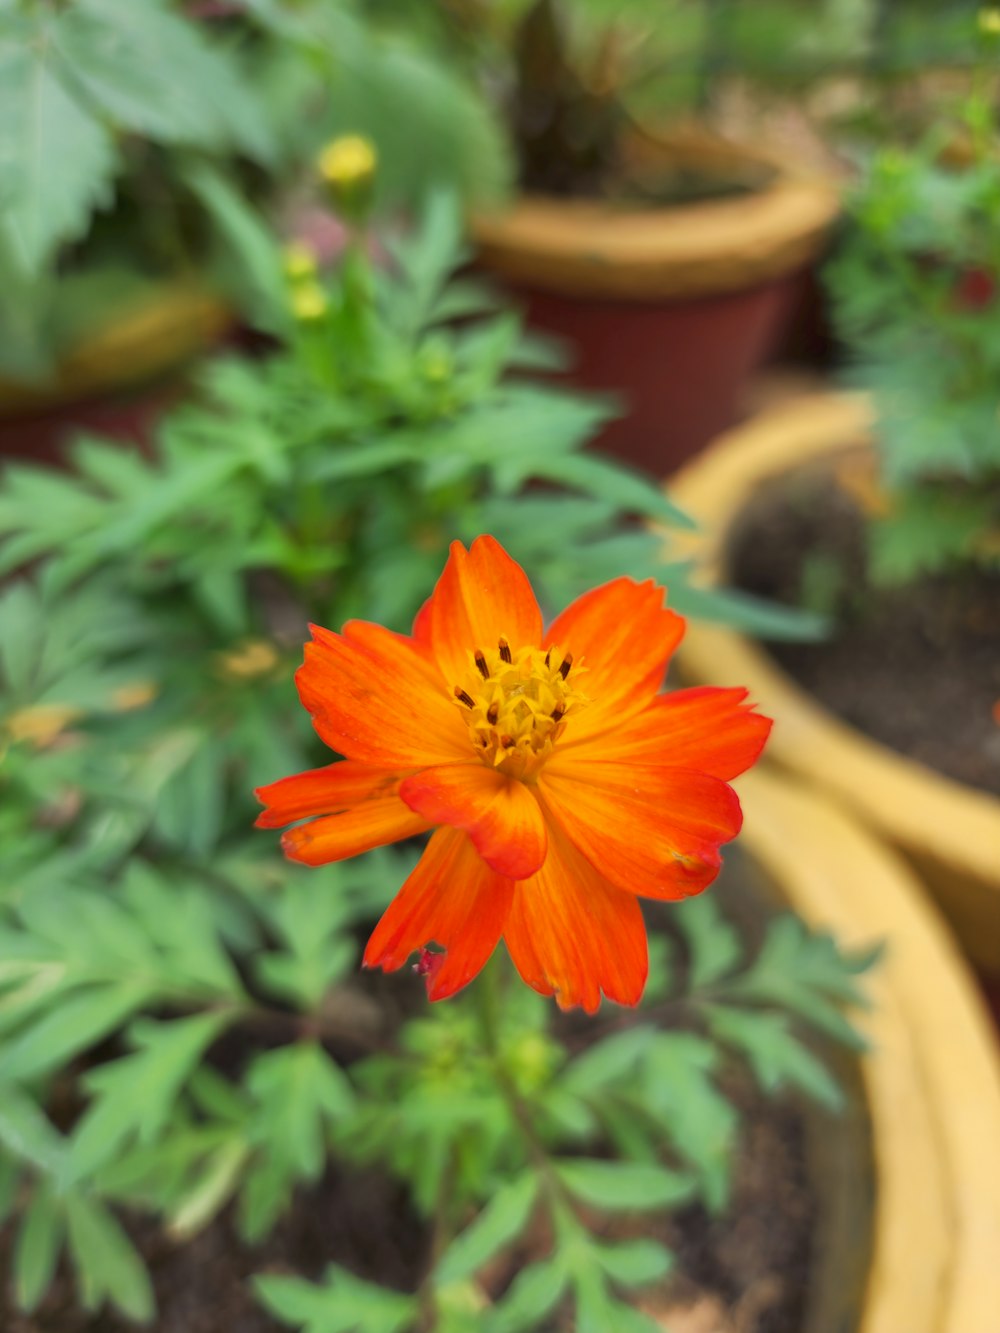 a close up of an orange flower in a garden